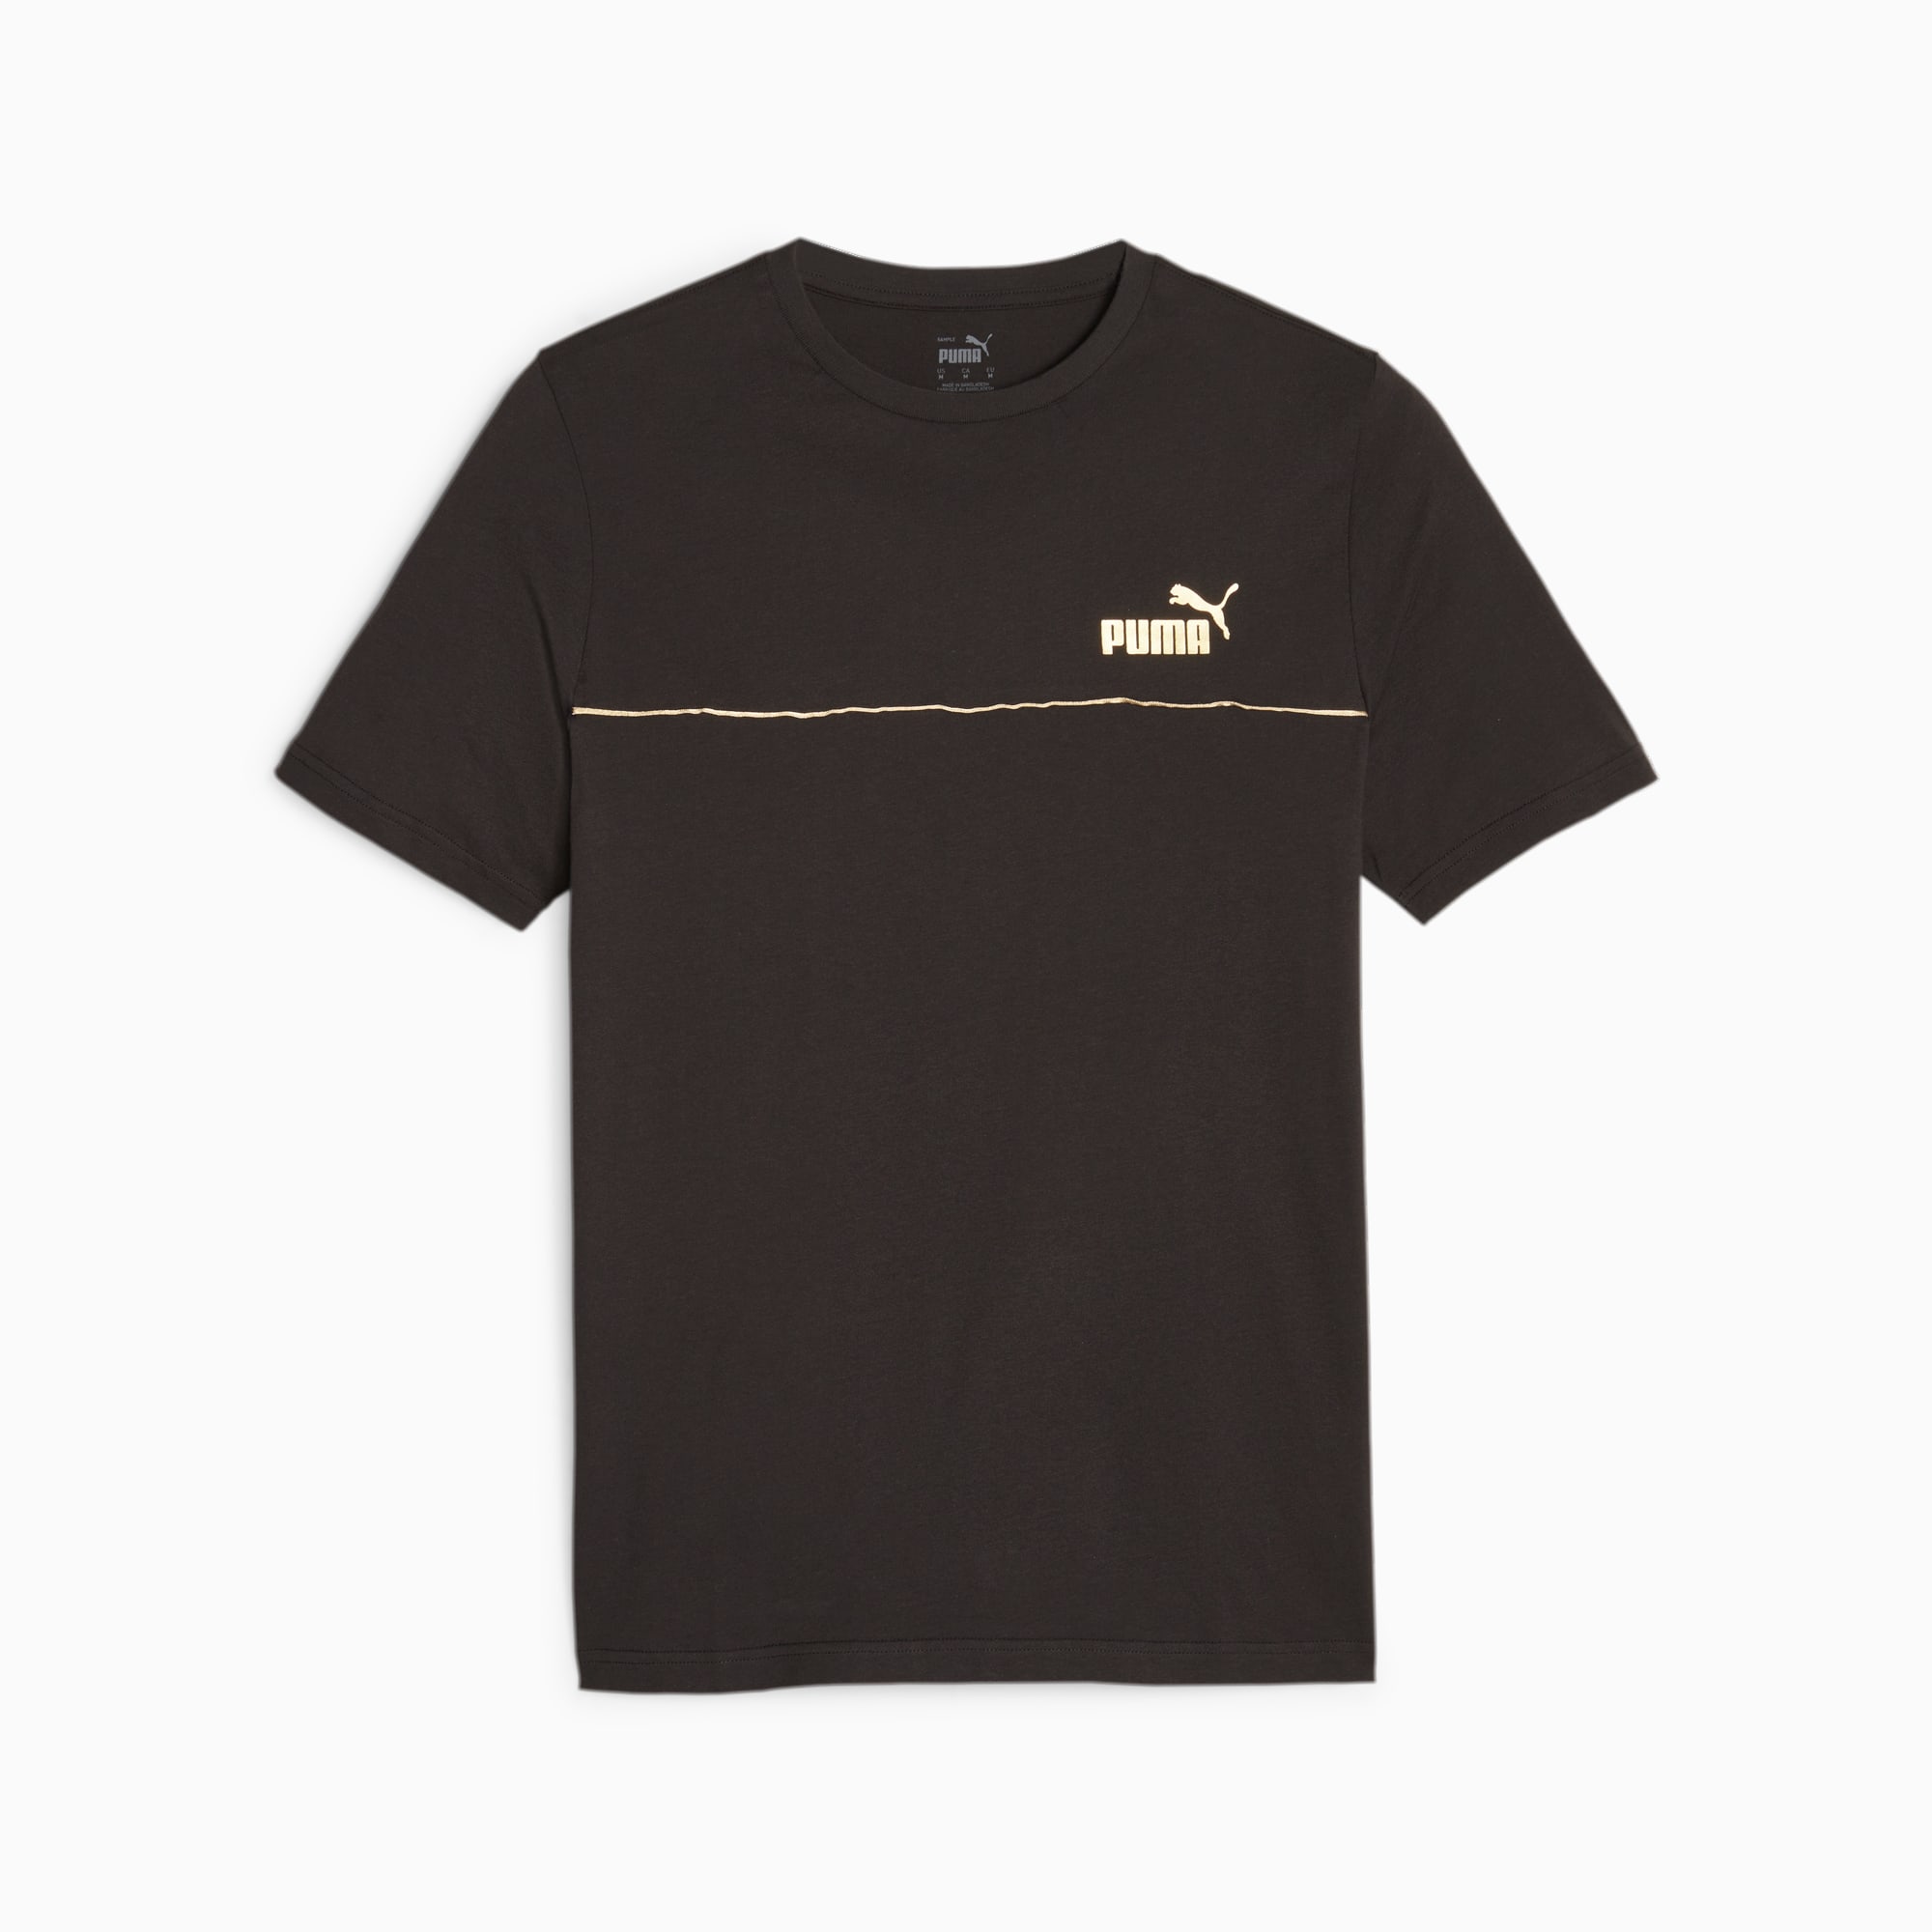 PUMA Ess+ Minimal Gold Men's T-Shirt, Black